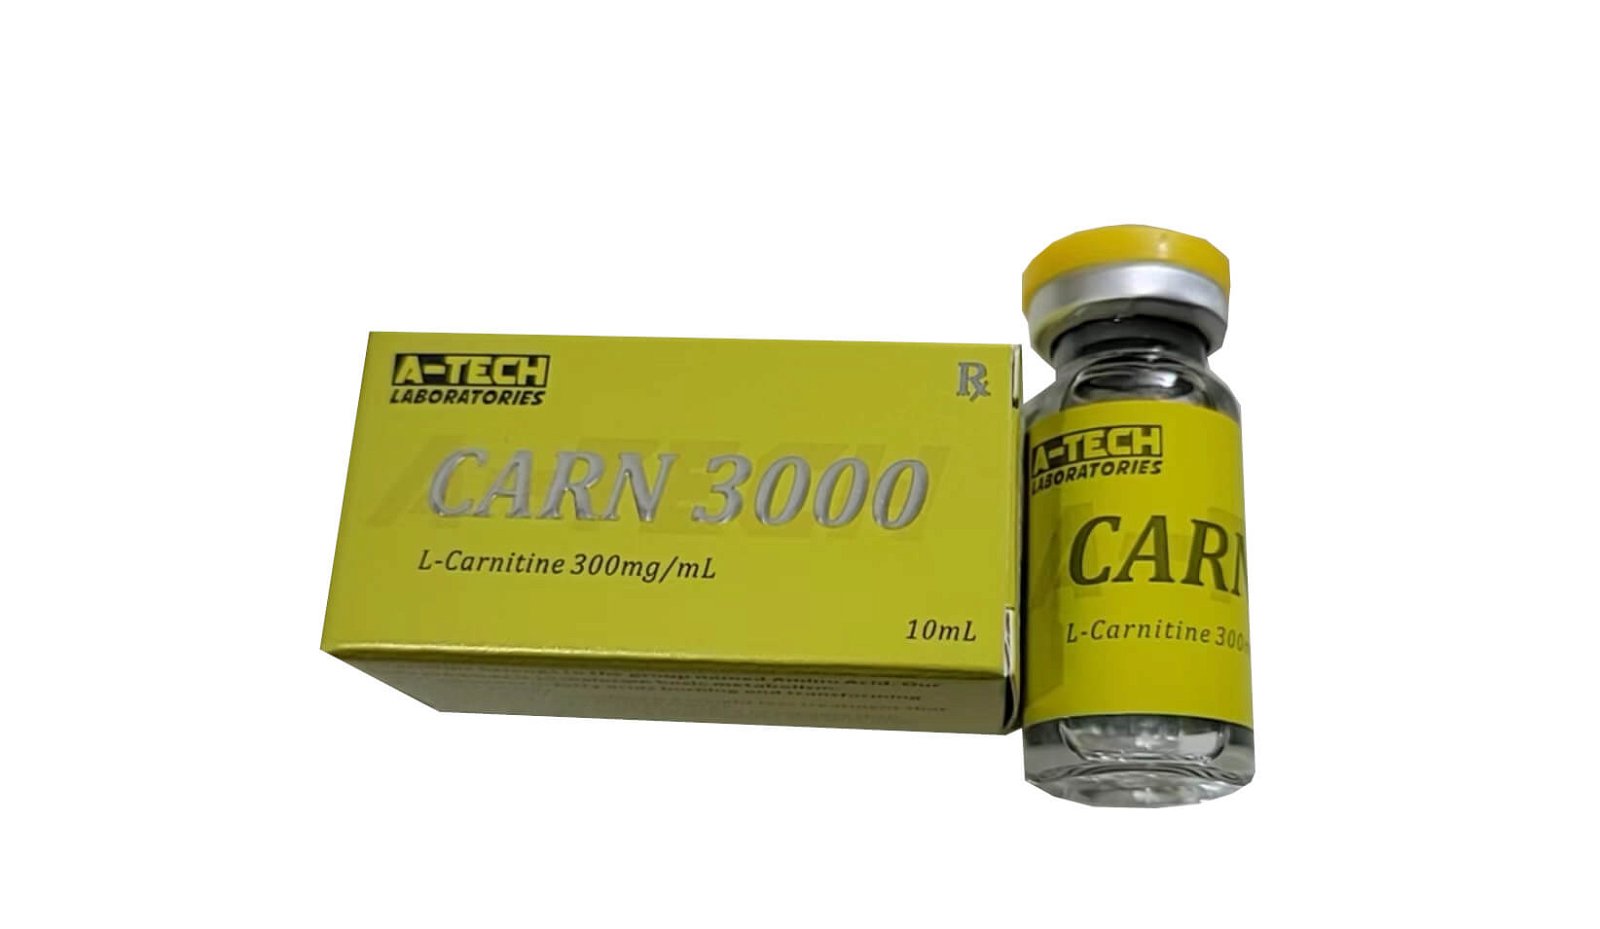 L-carnitine 300 mg A-tech-laboratoria